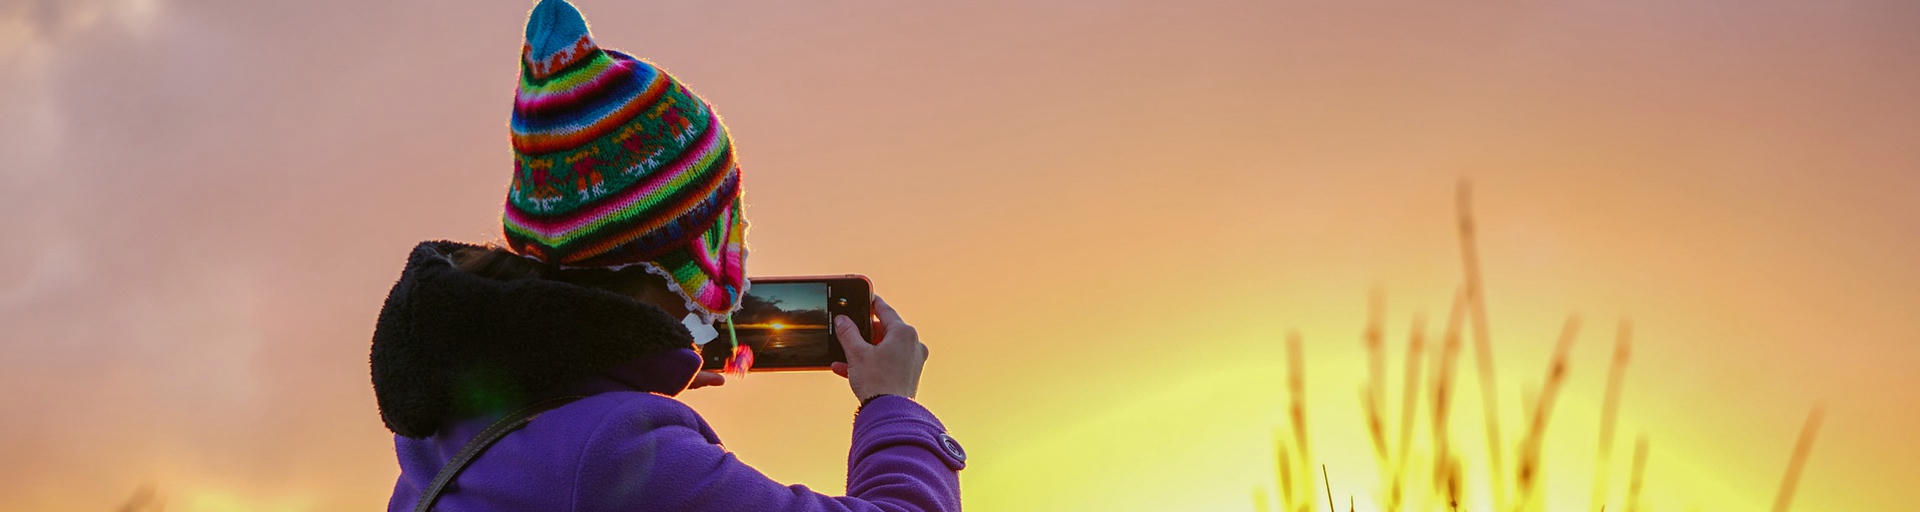 Frau mit bunter Mütze fotografiert Sonnenuntergang